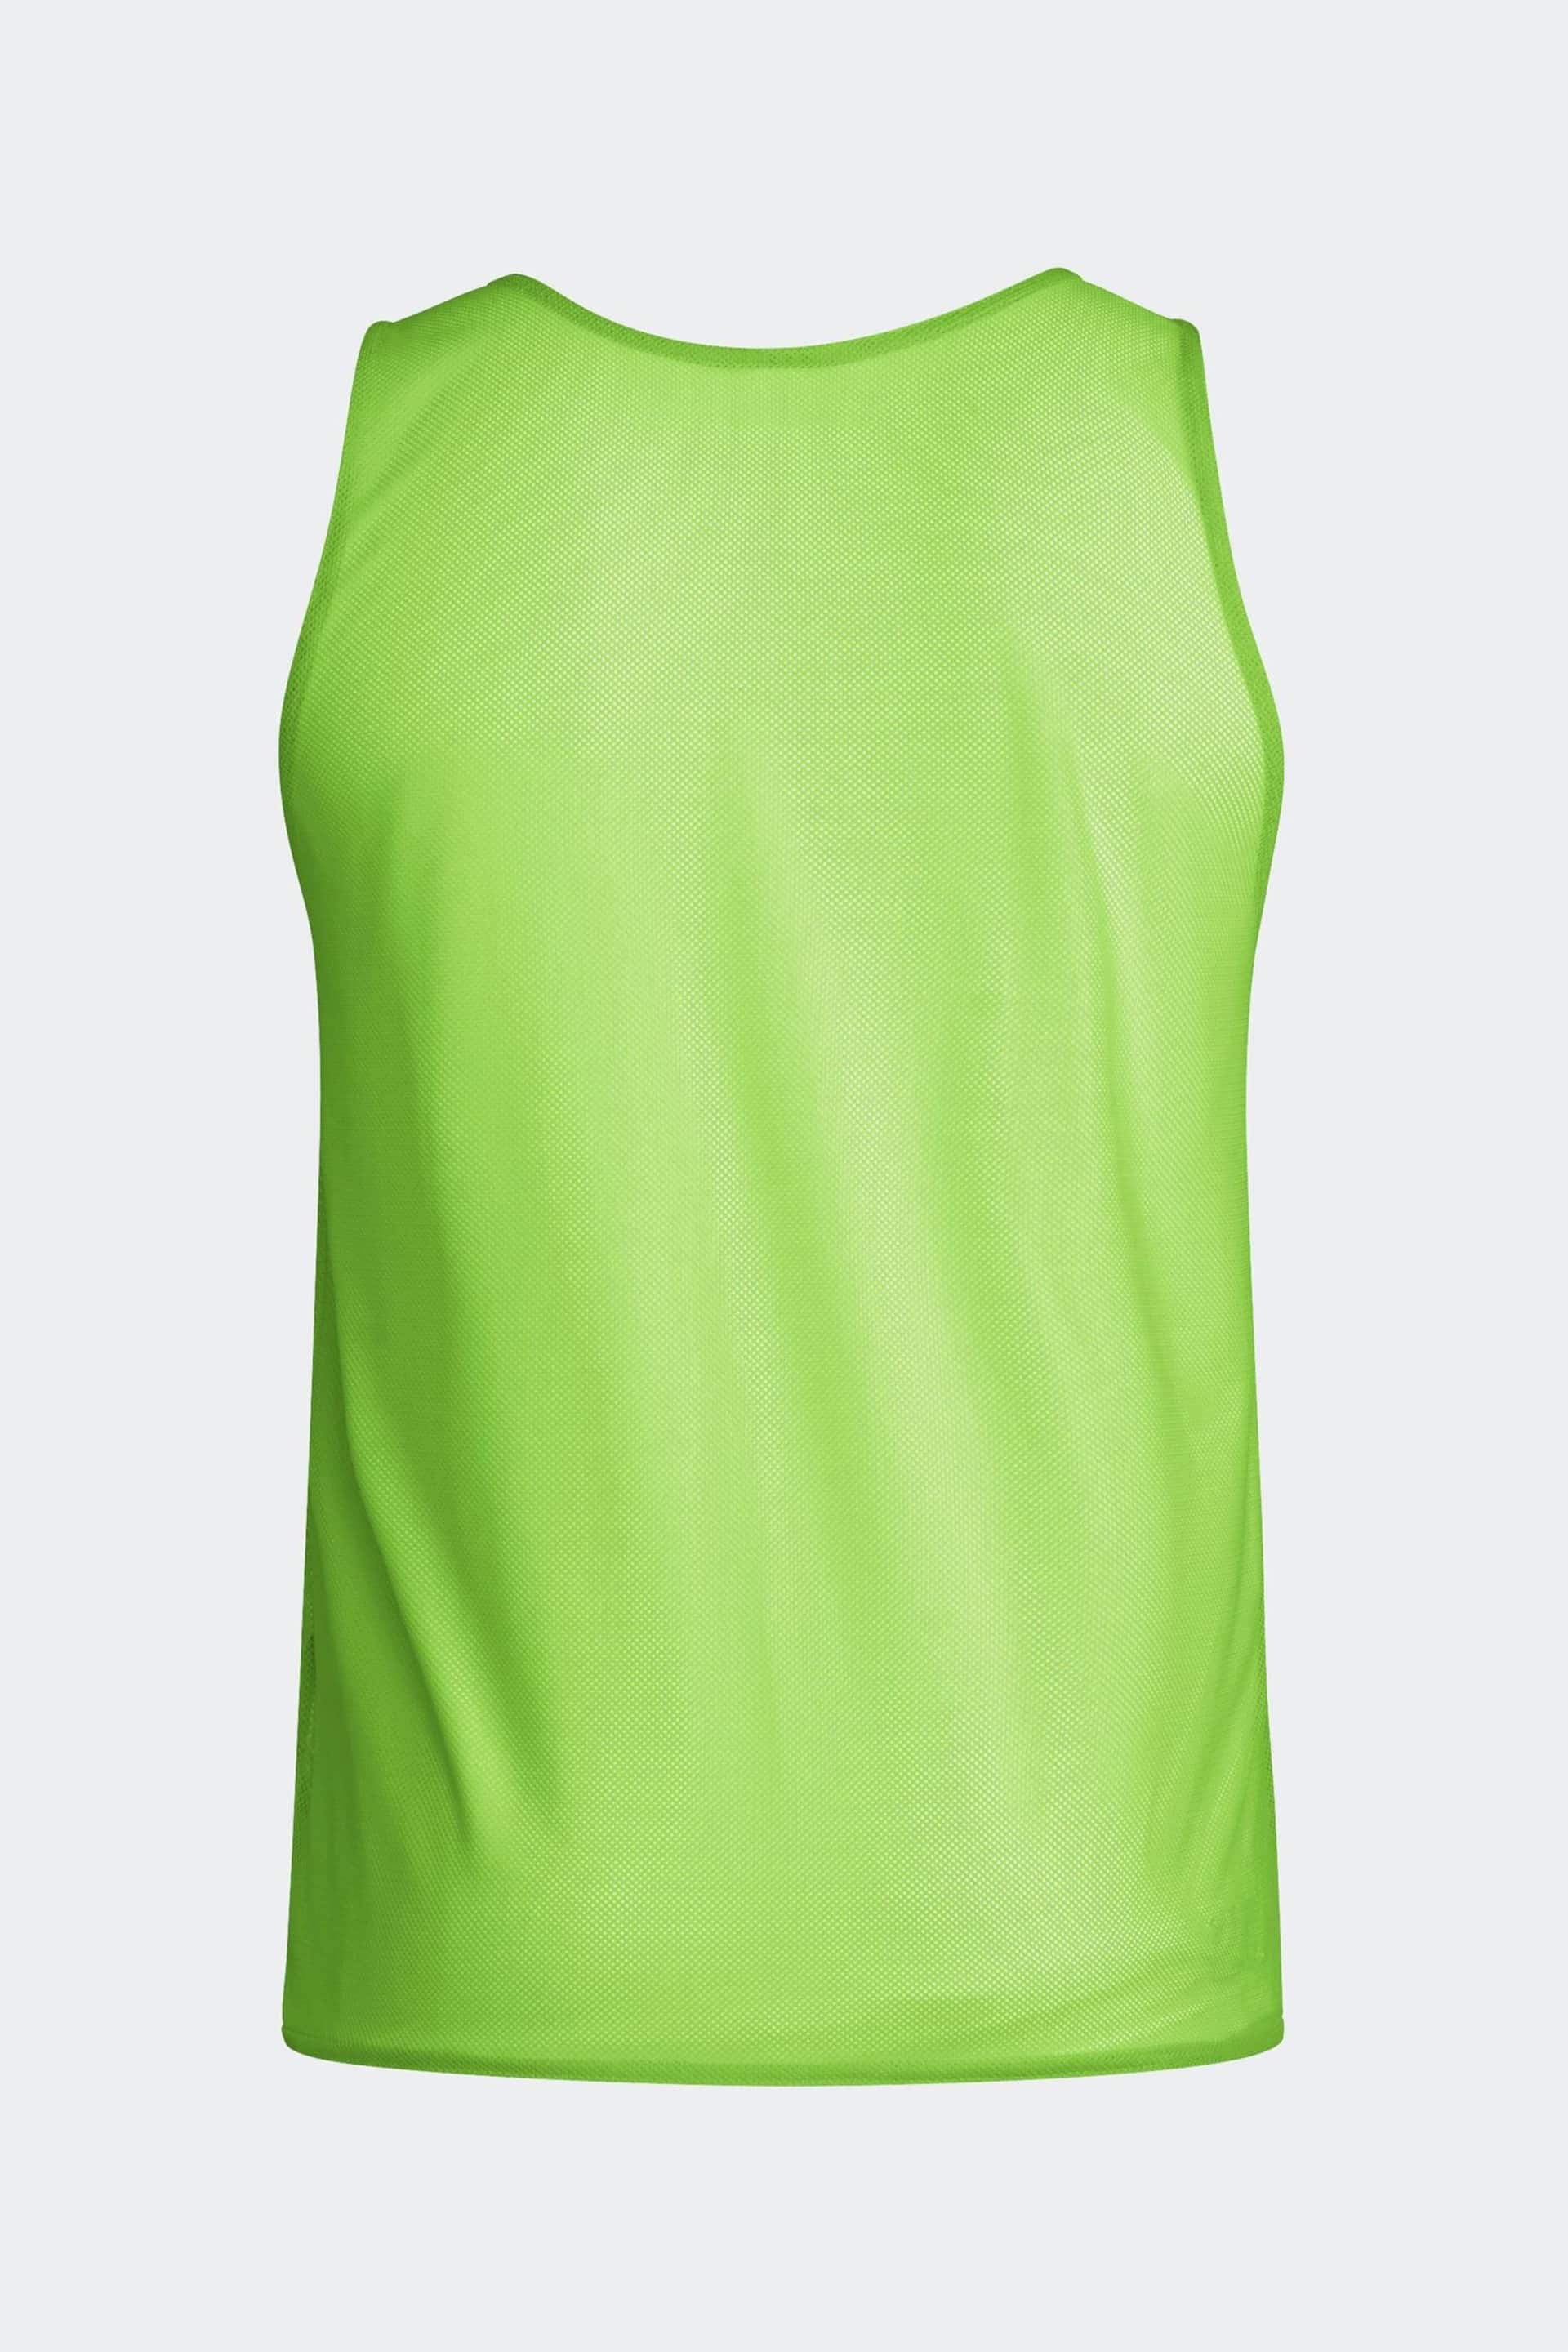 adidas Bright Green Performance Vest - Image 2 of 2